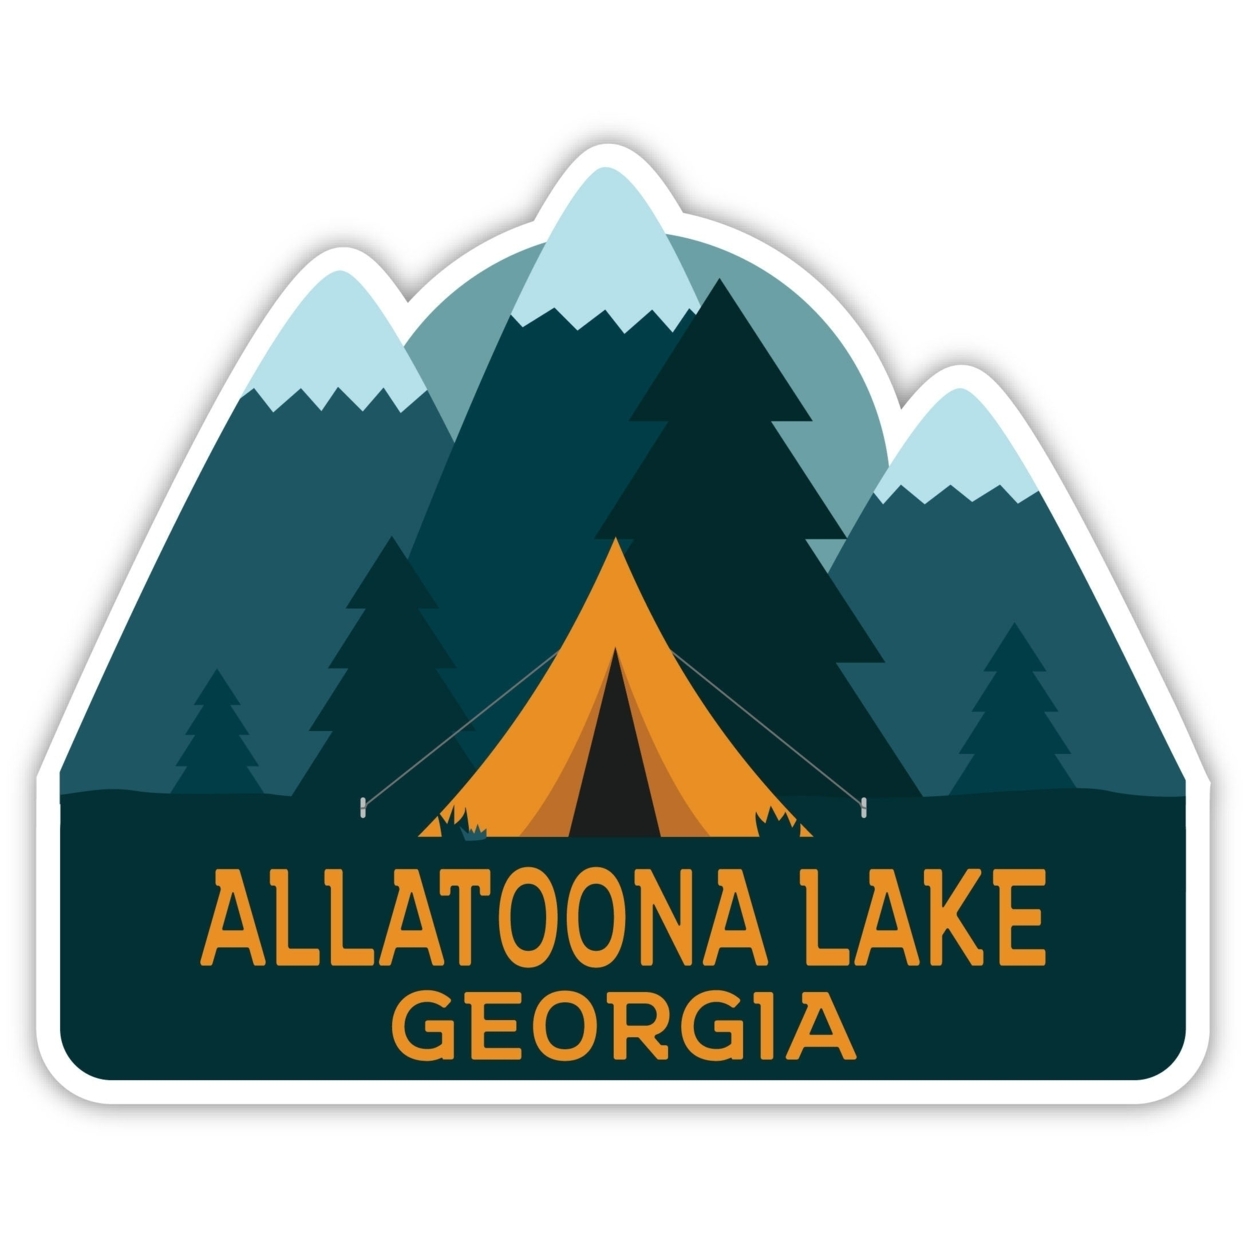 Allatoona Lake Georgia Souvenir Decorative Stickers (Choose Theme And Size) - 4-Pack, 4-Inch, Tent